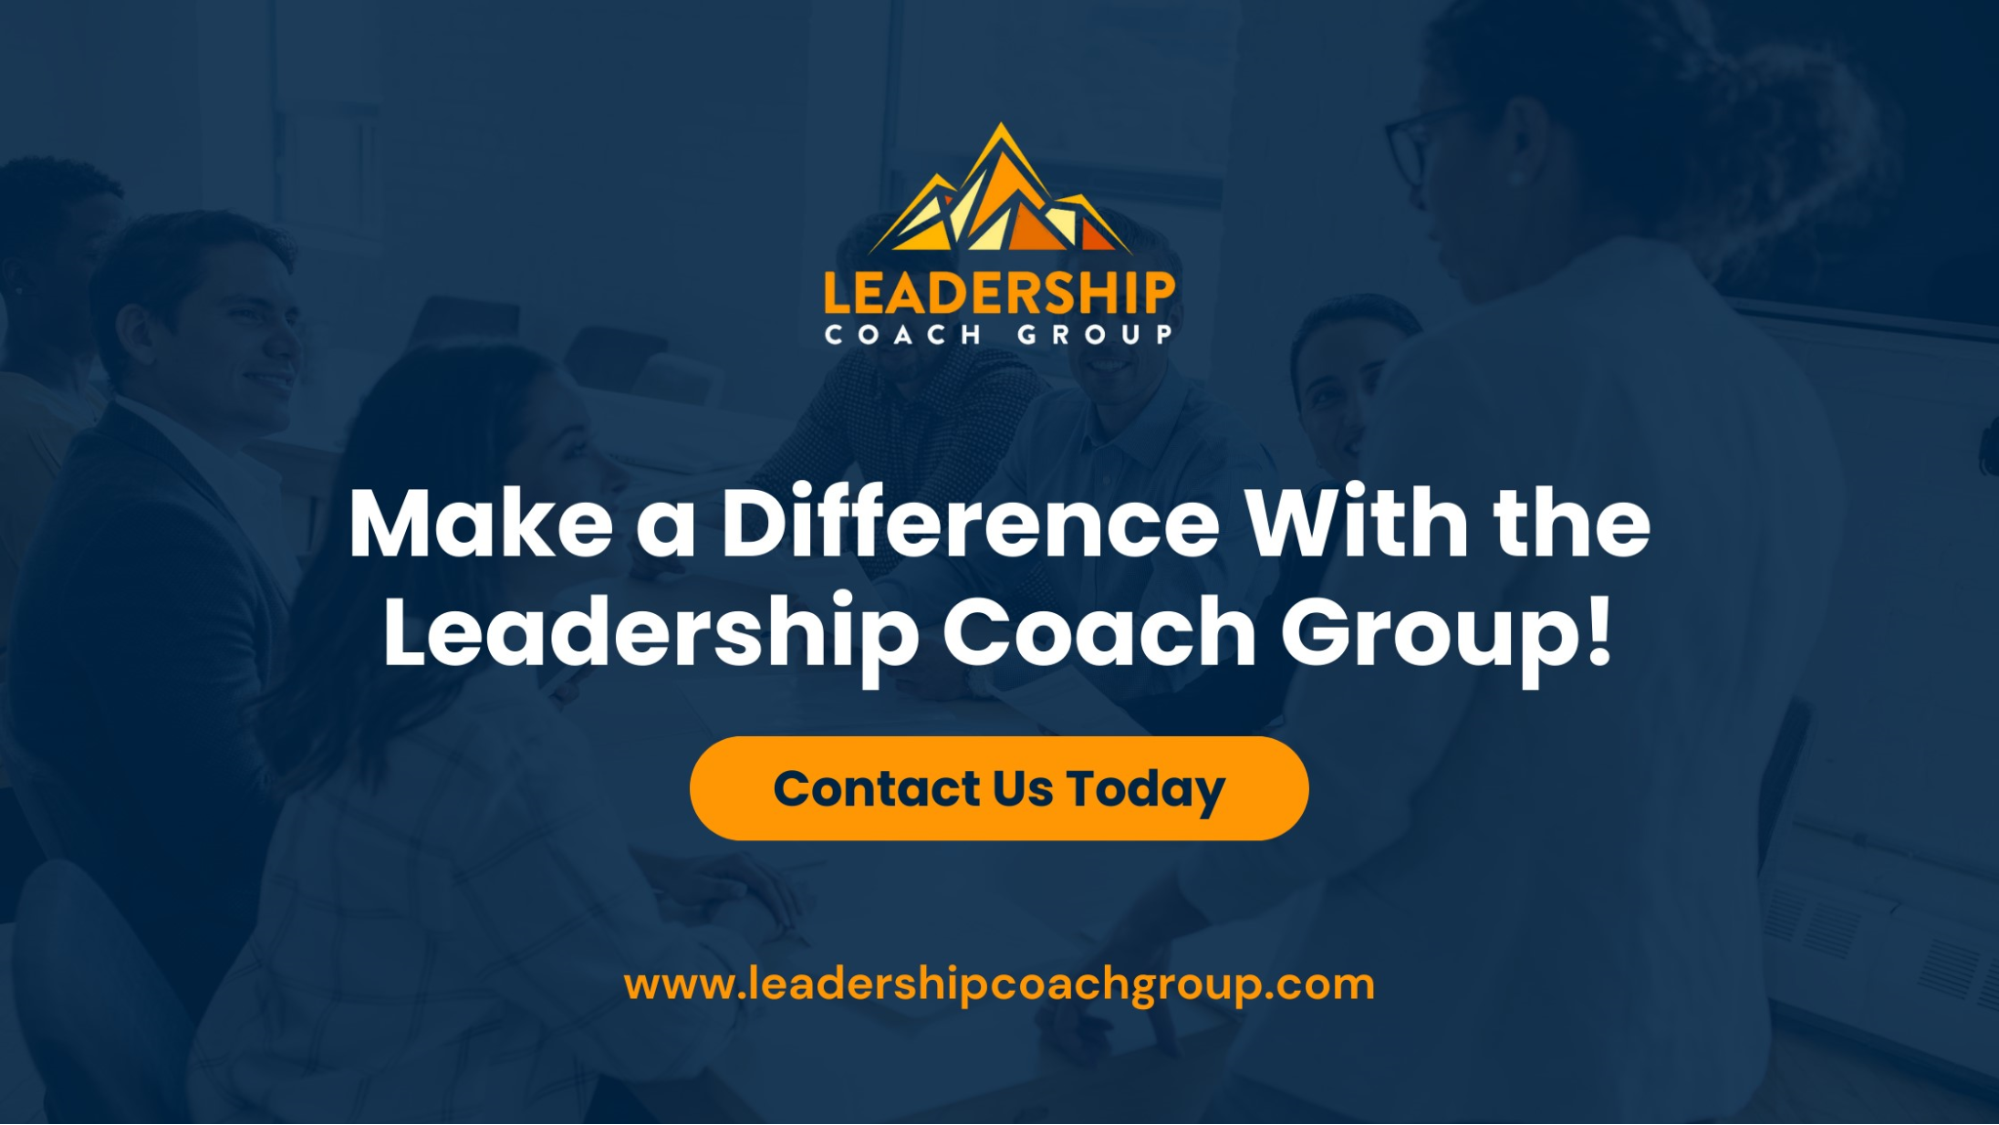 Leader Coach Group CTA